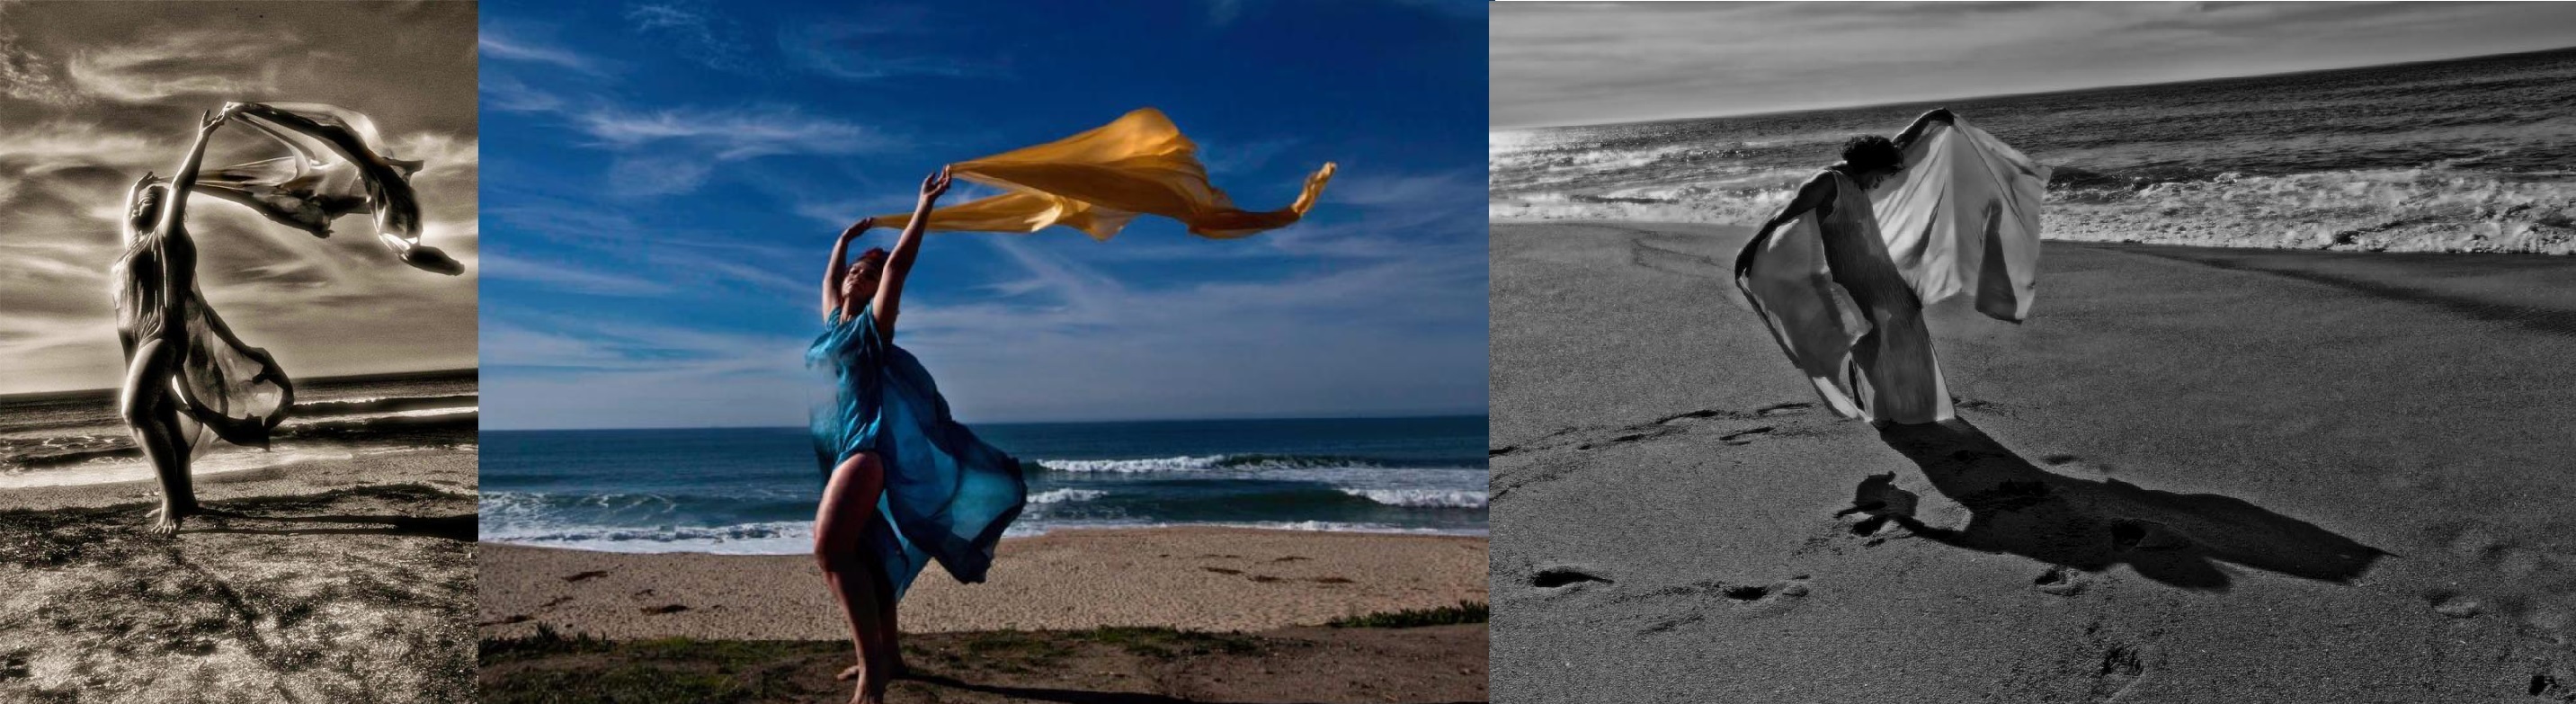 "Loisadora Beach Triptych"